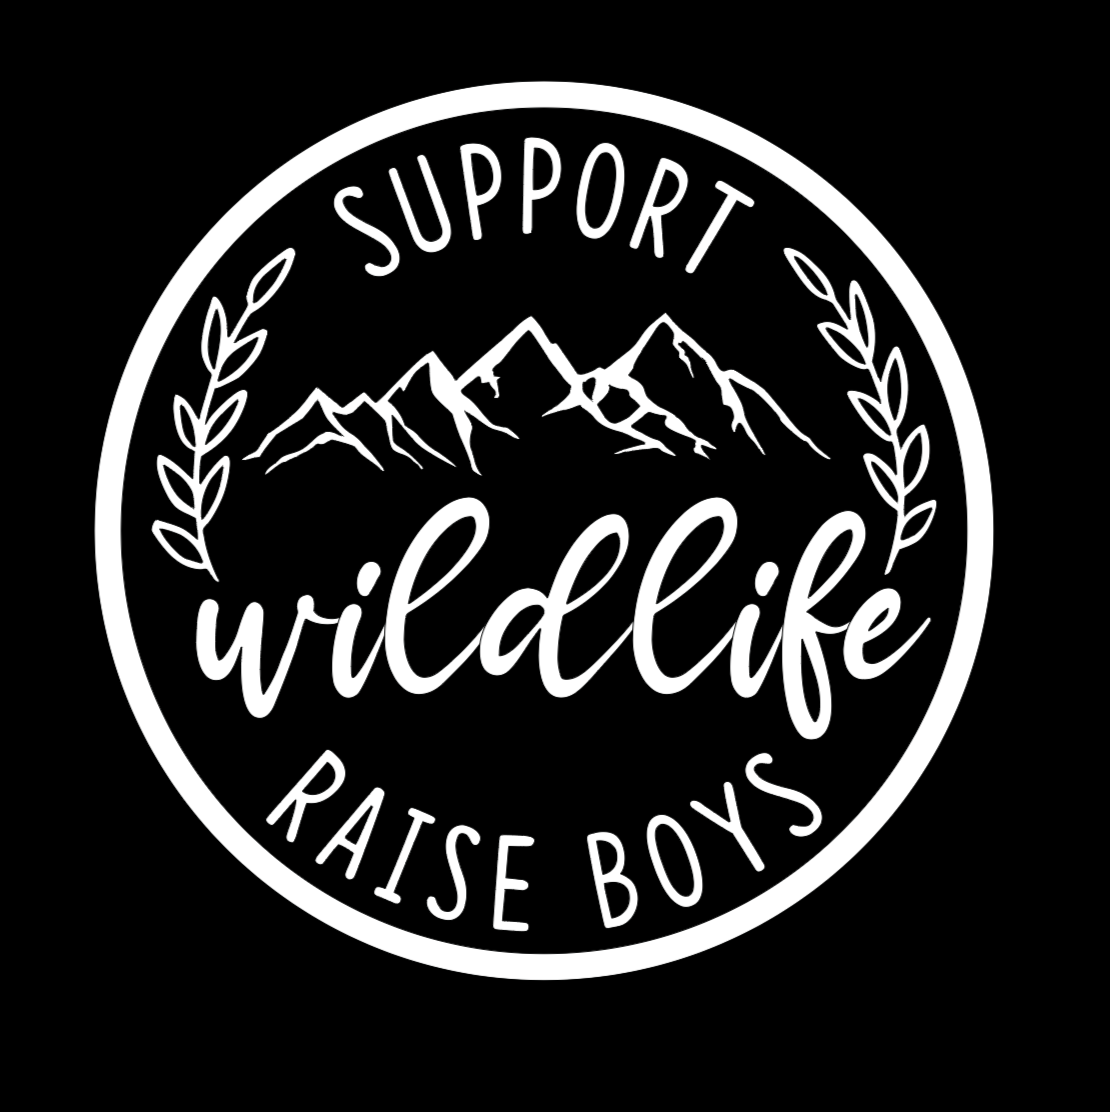 Support Wildlife Raise Boys Decal